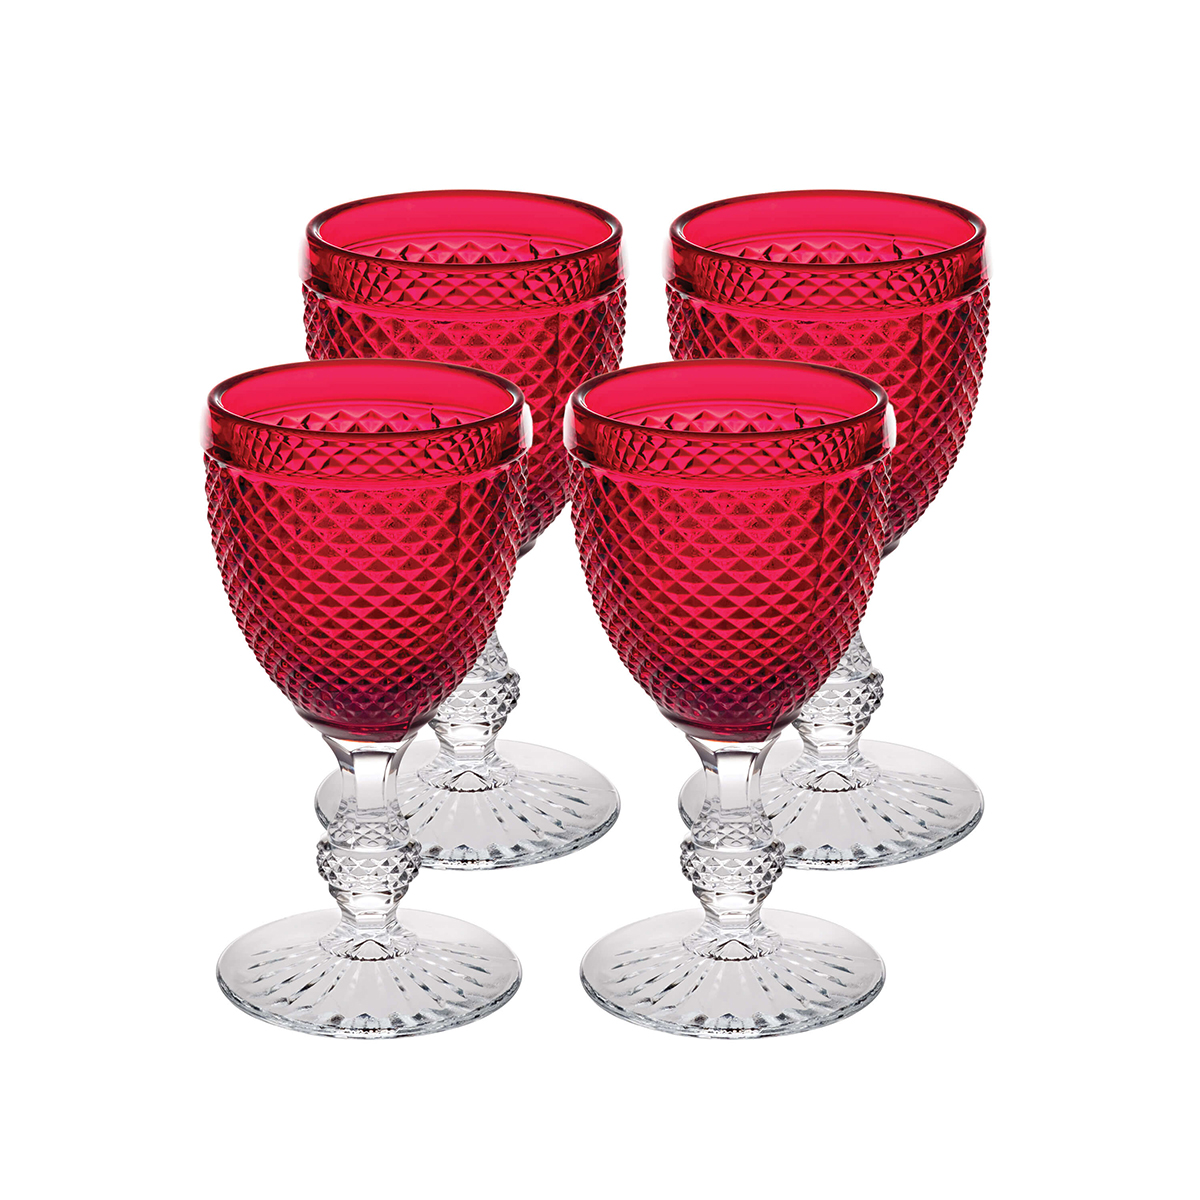 Vista Alegre Glass Bicos Bicolor Goblet With Red Top, Set of 4